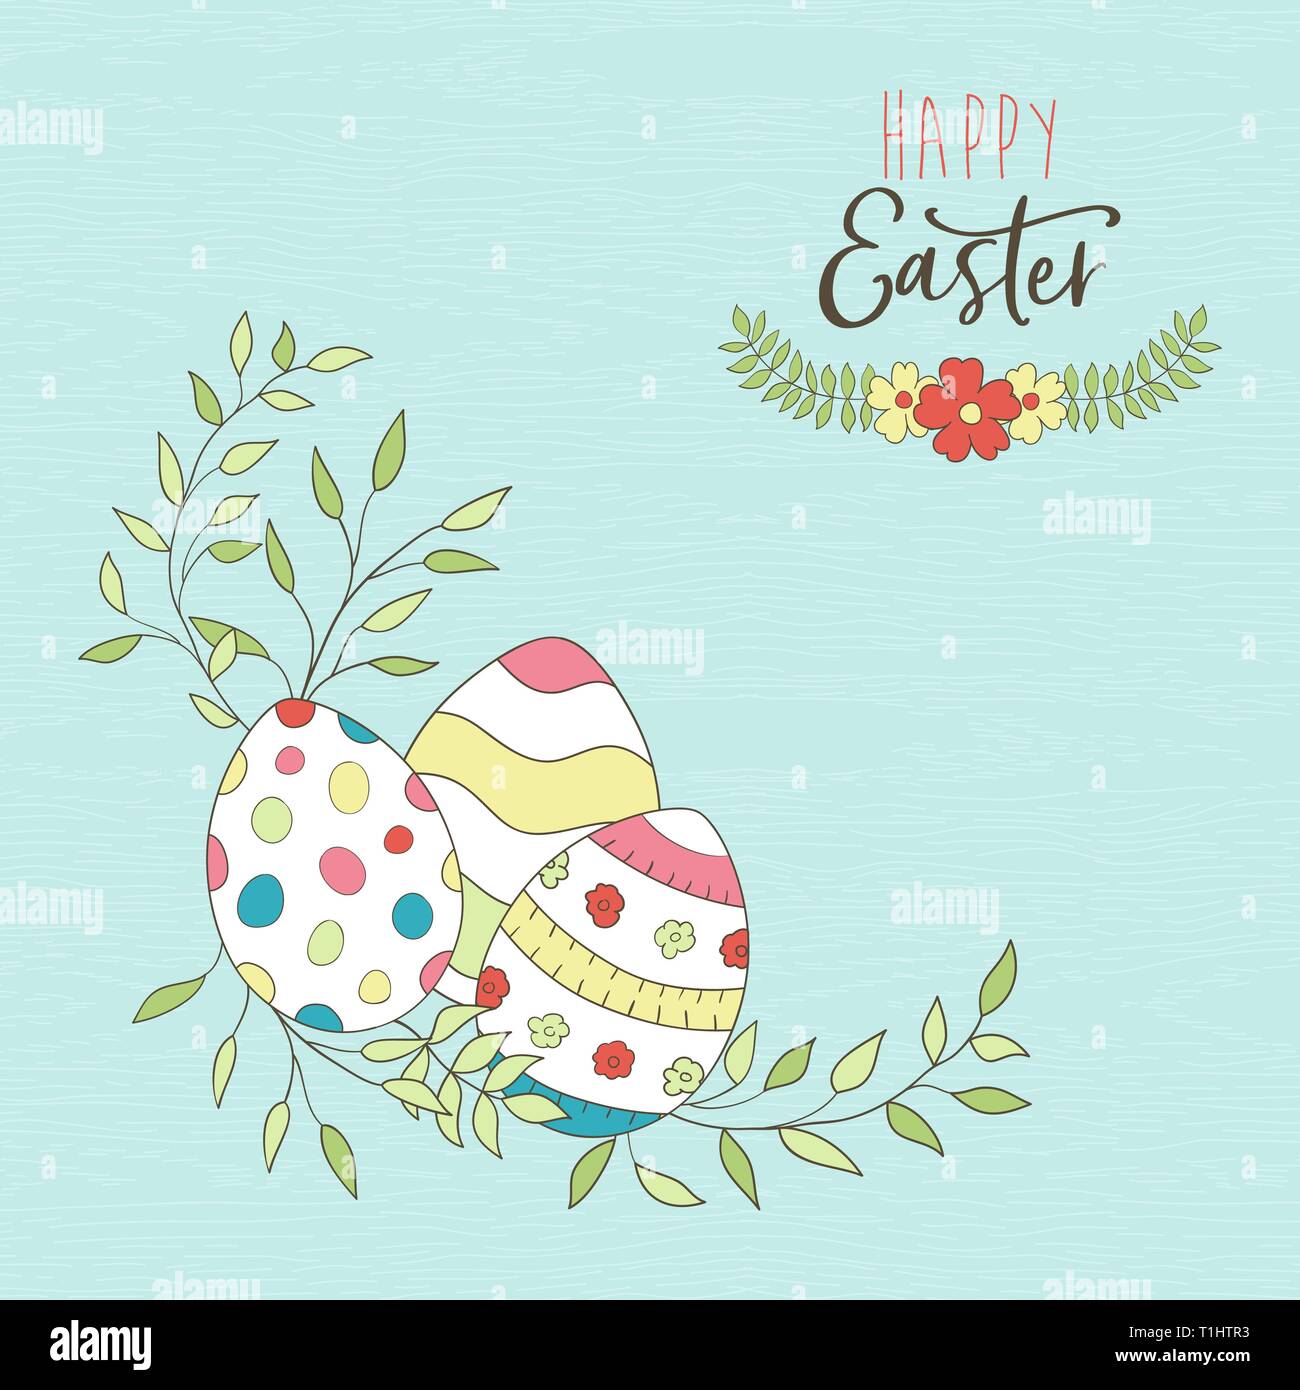 Happy Easter Holiday Illustration For Spring Season Celebration